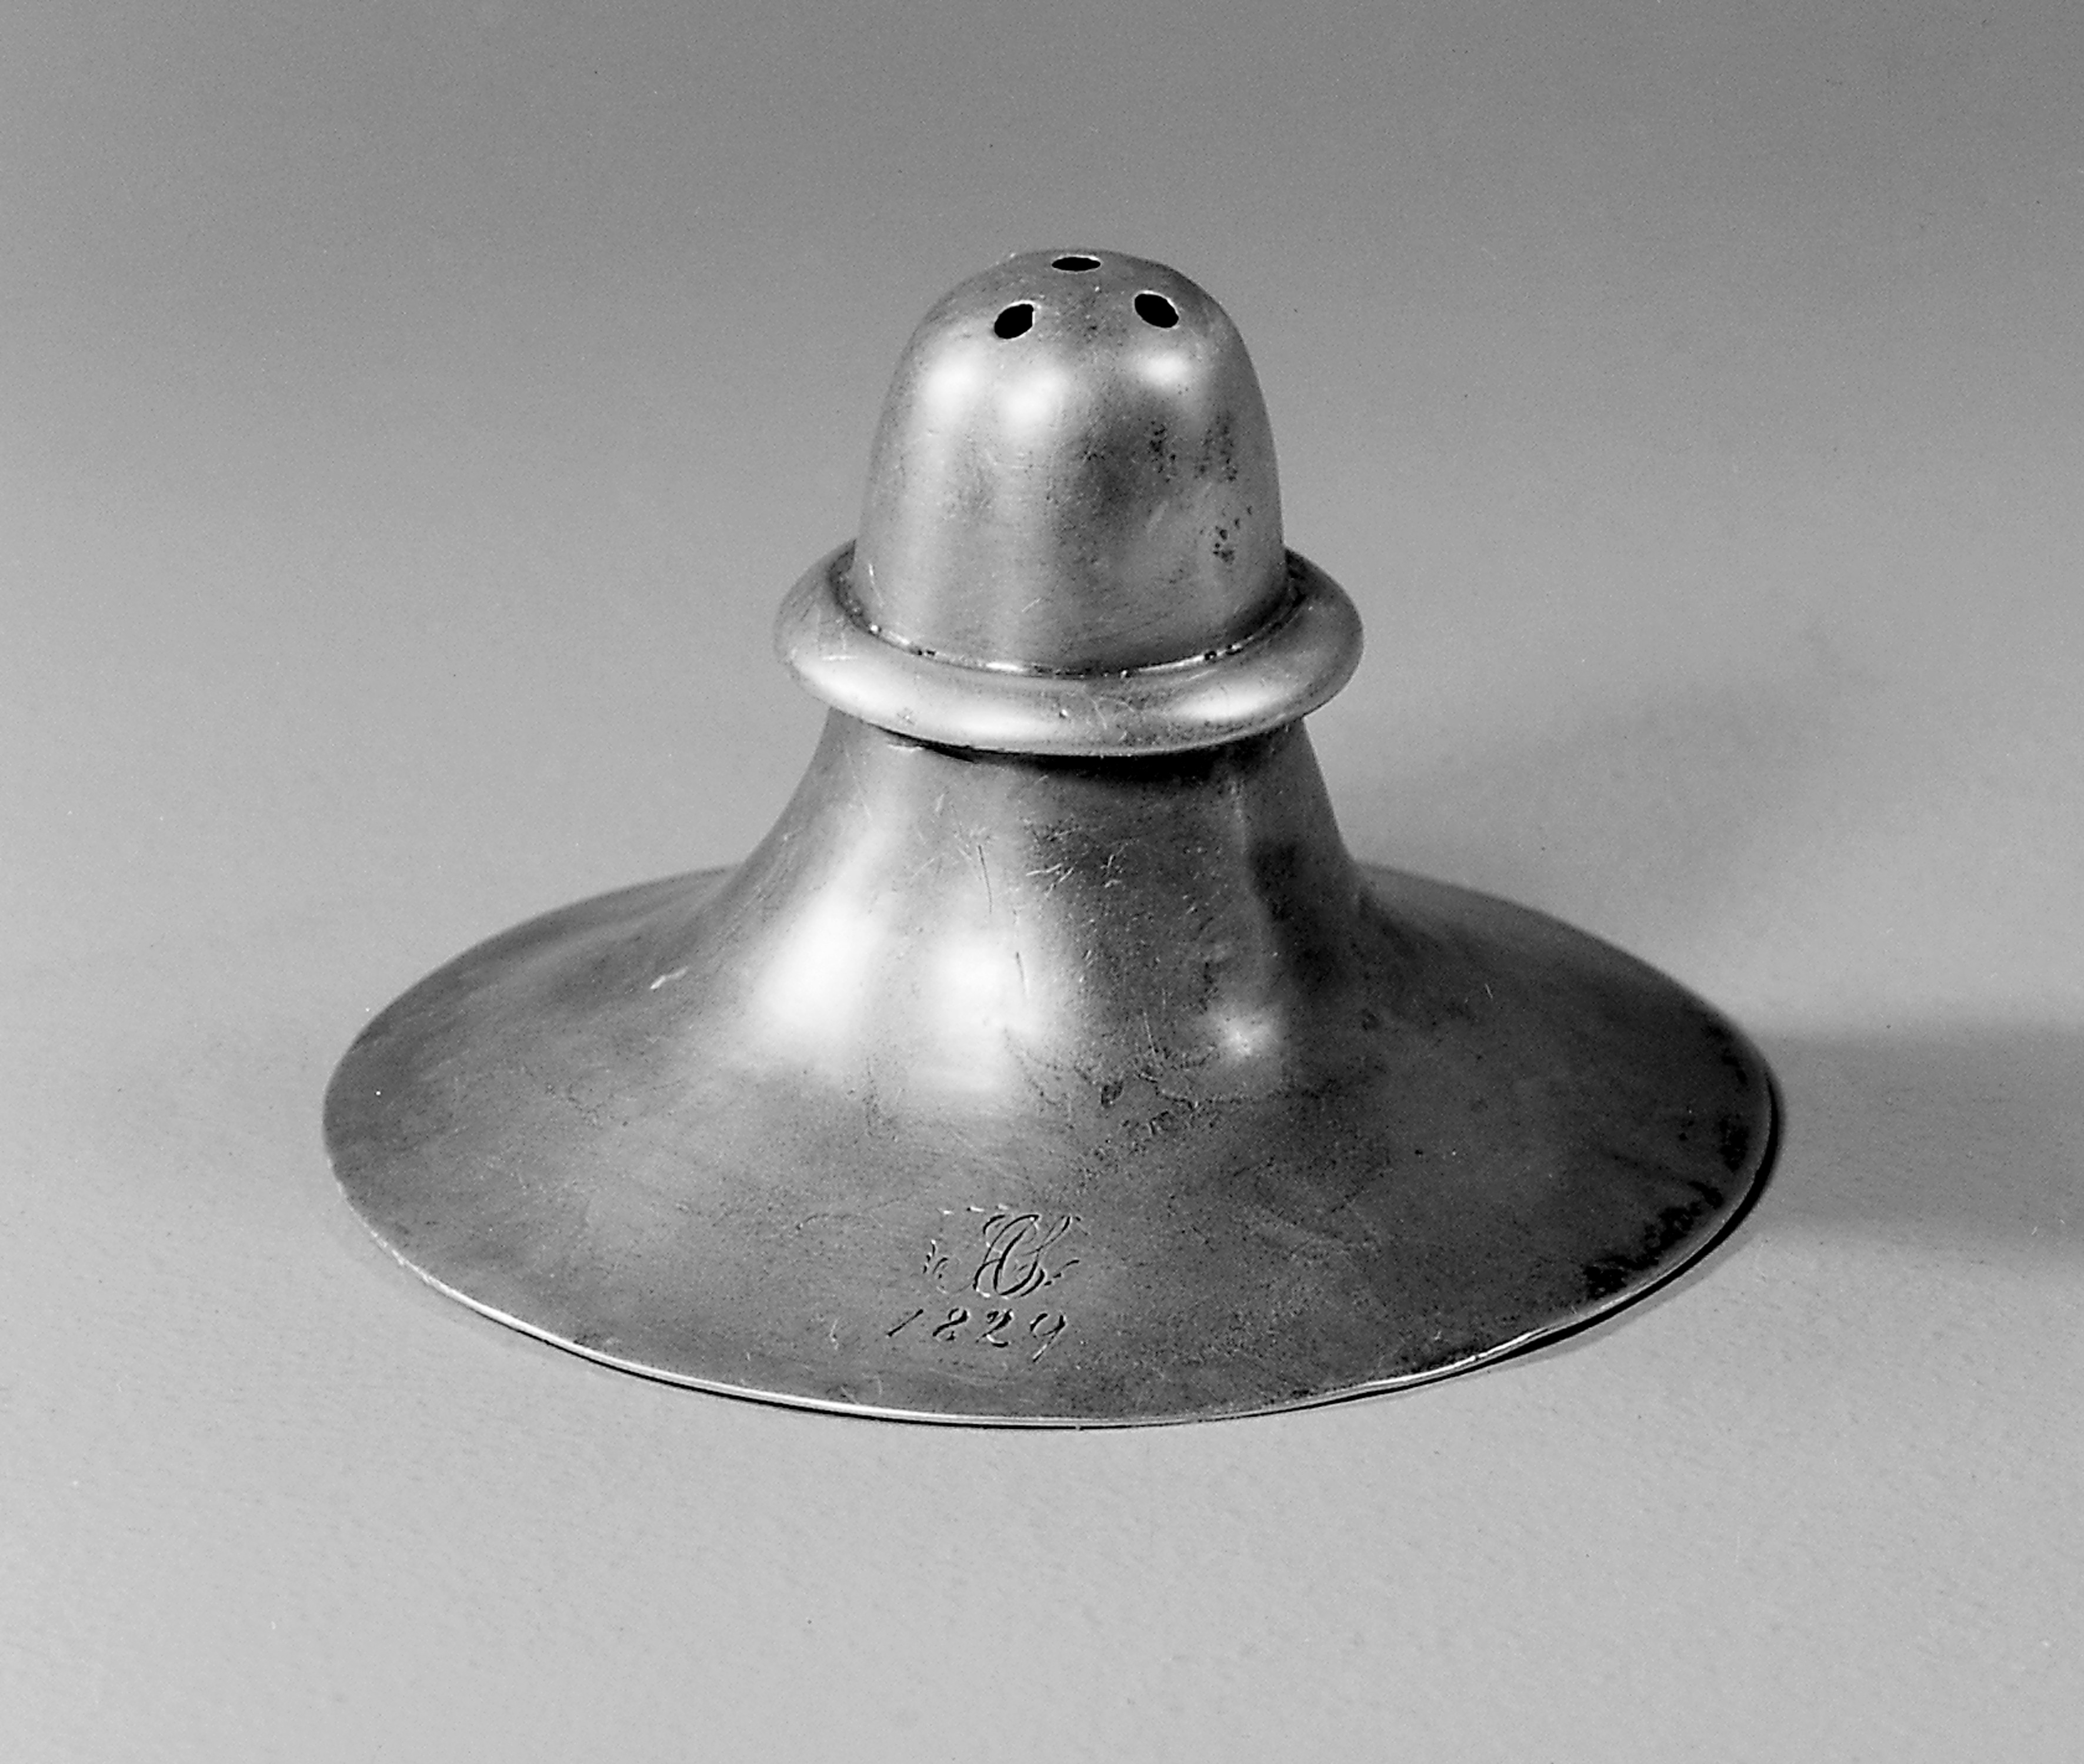 https://upload.wikimedia.org/wikipedia/commons/d/df/Nipple_shield_in_silver%2C_bearing_the_date_1829._Wellcome_M0018437.jpg